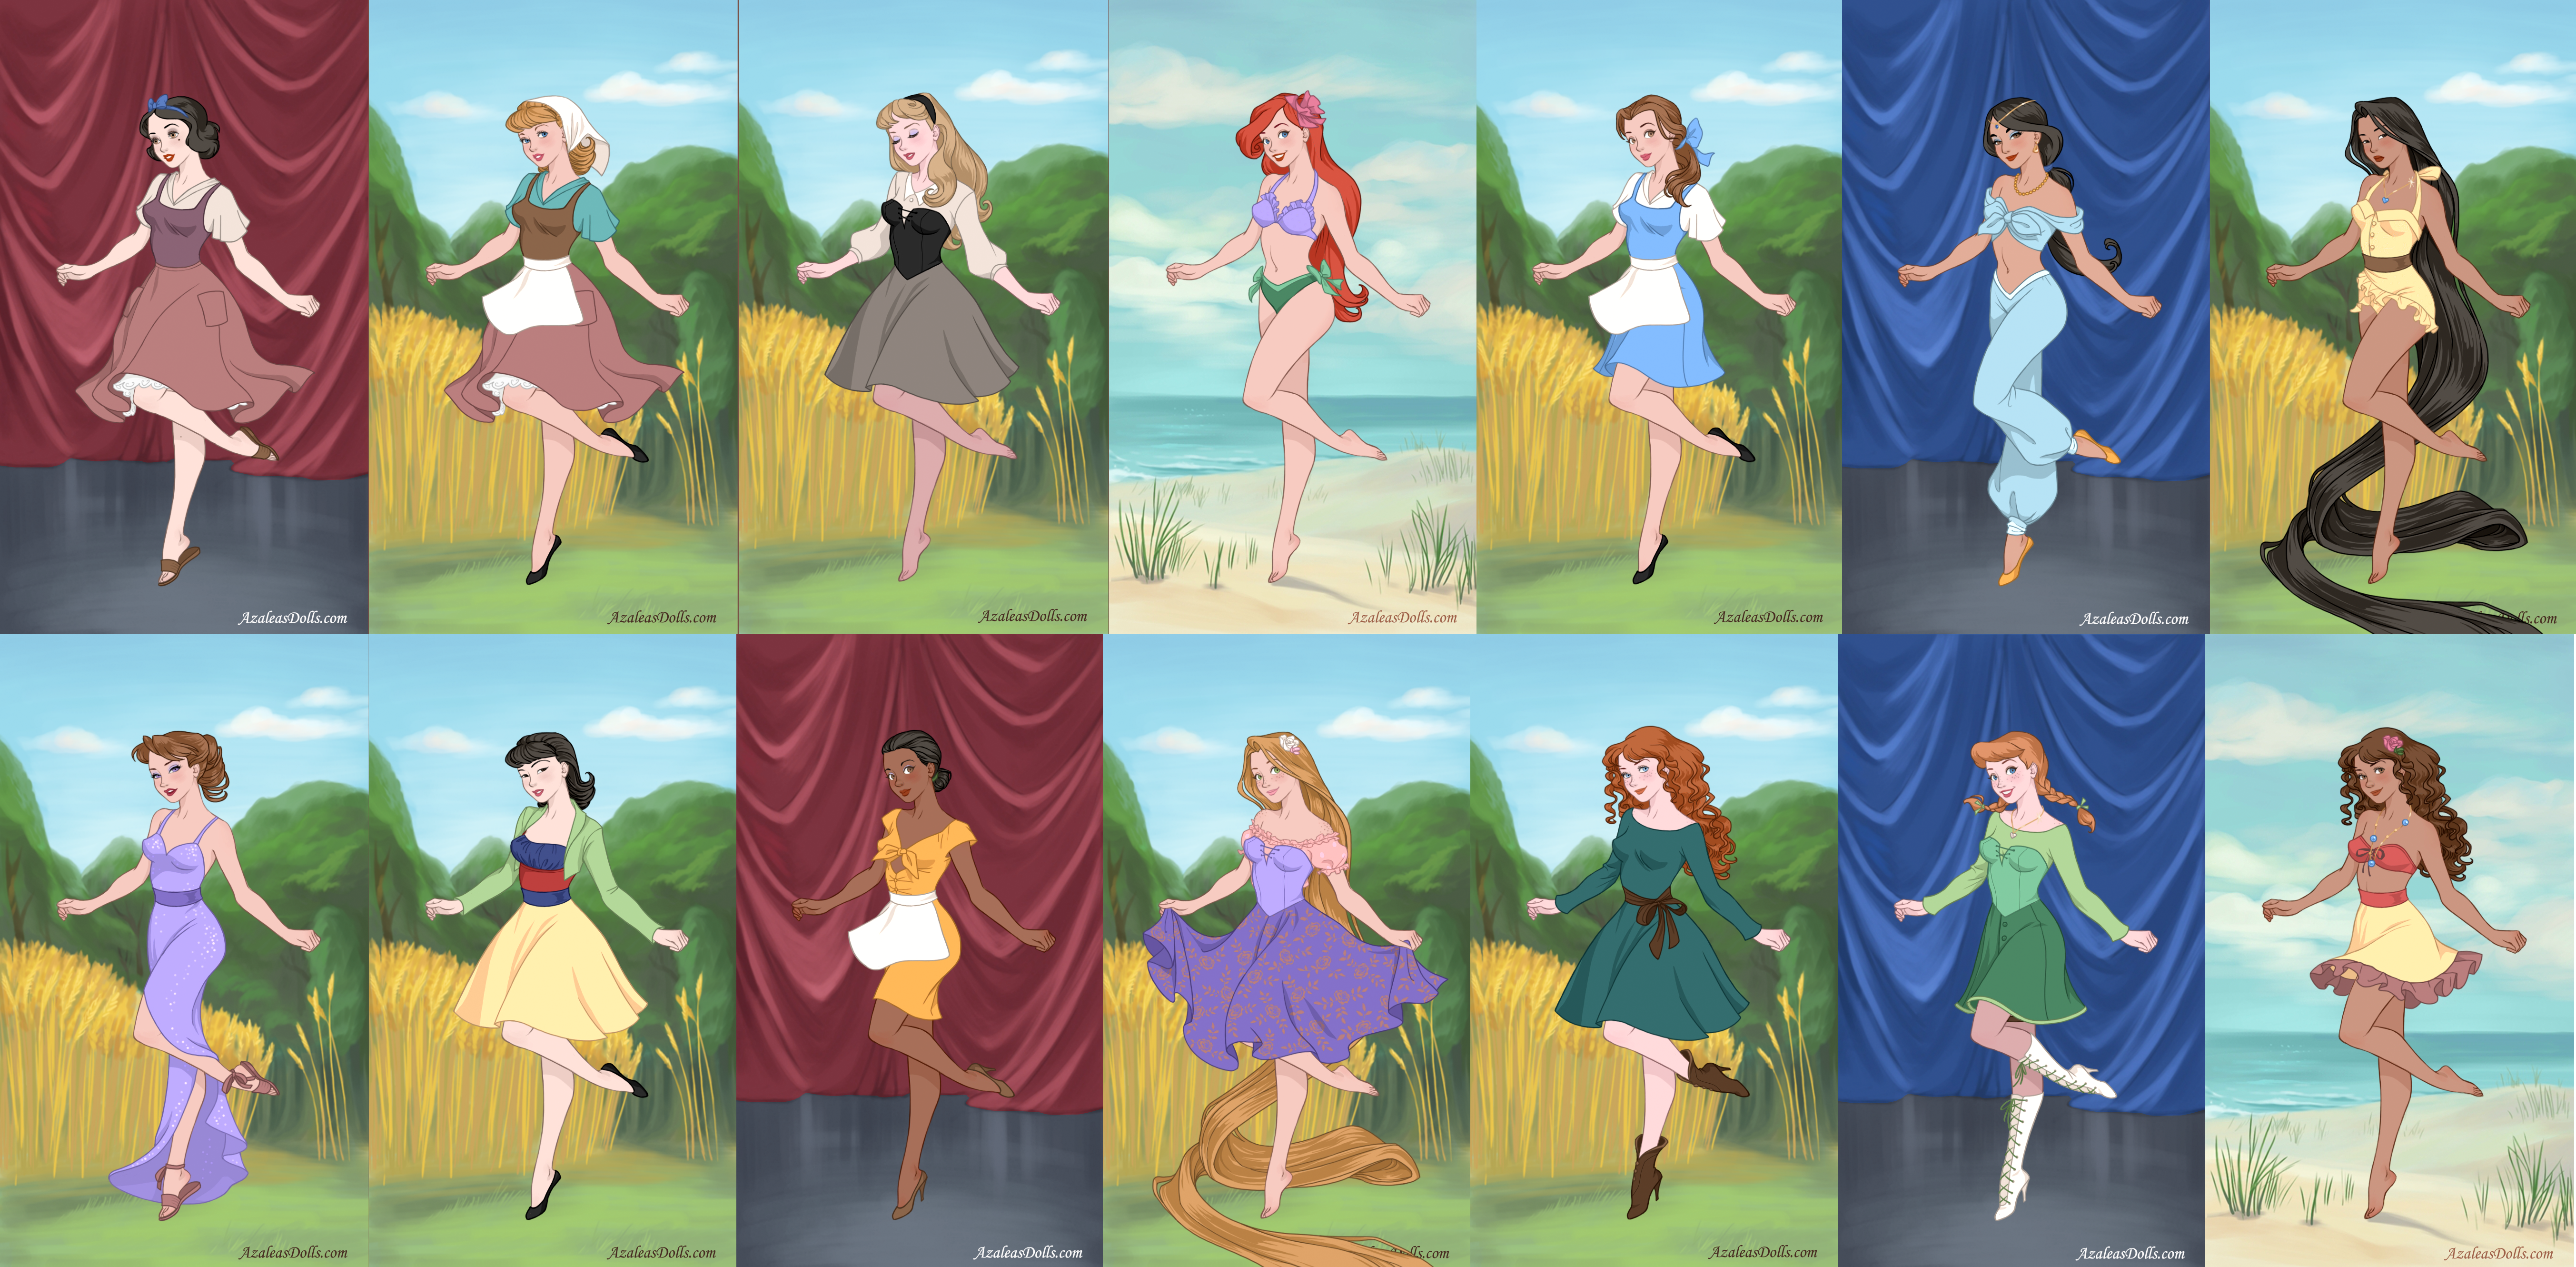 AzaleasDolls Pin Up Princess - Disney Ladies 02.01 by CheshireScalliArt on  DeviantArt